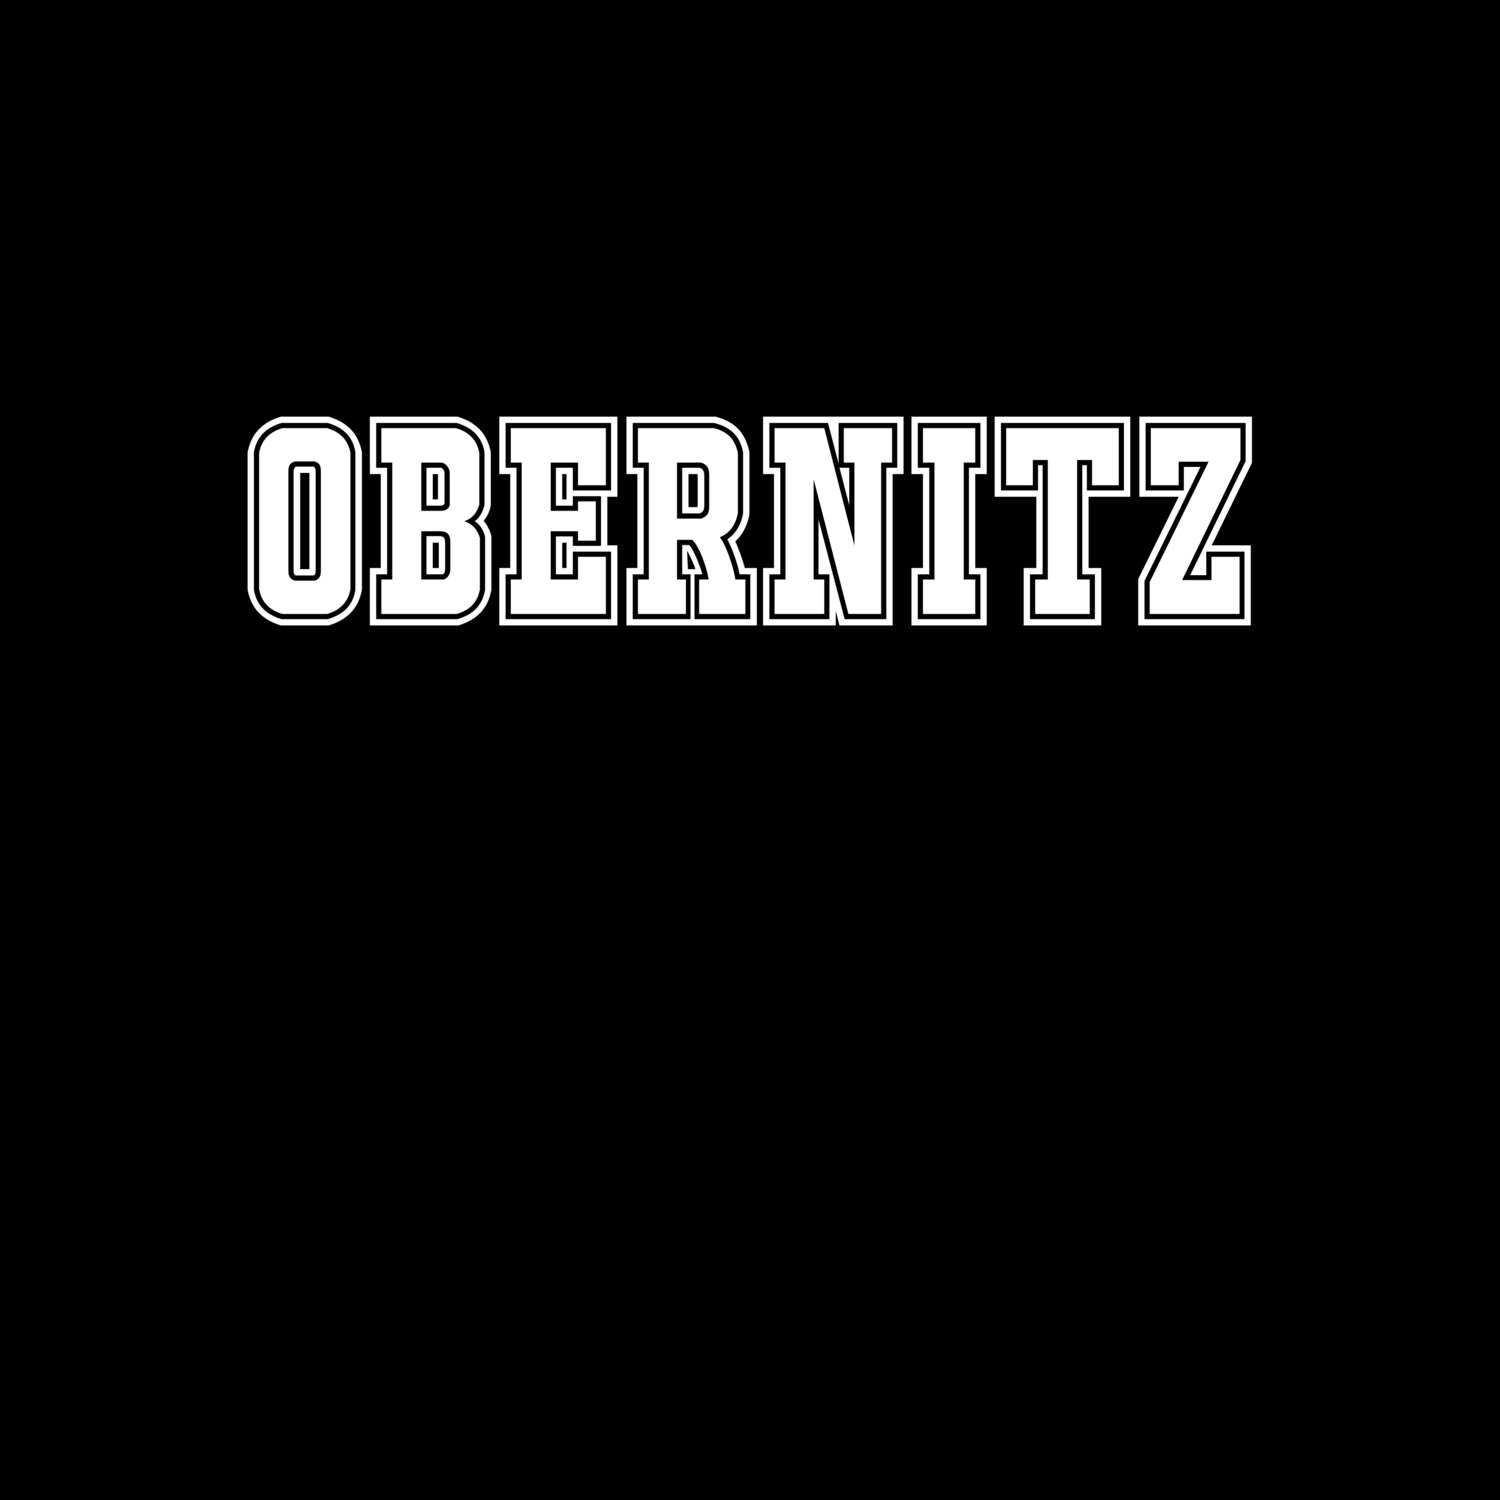 Obernitz T-Shirt »Classic«